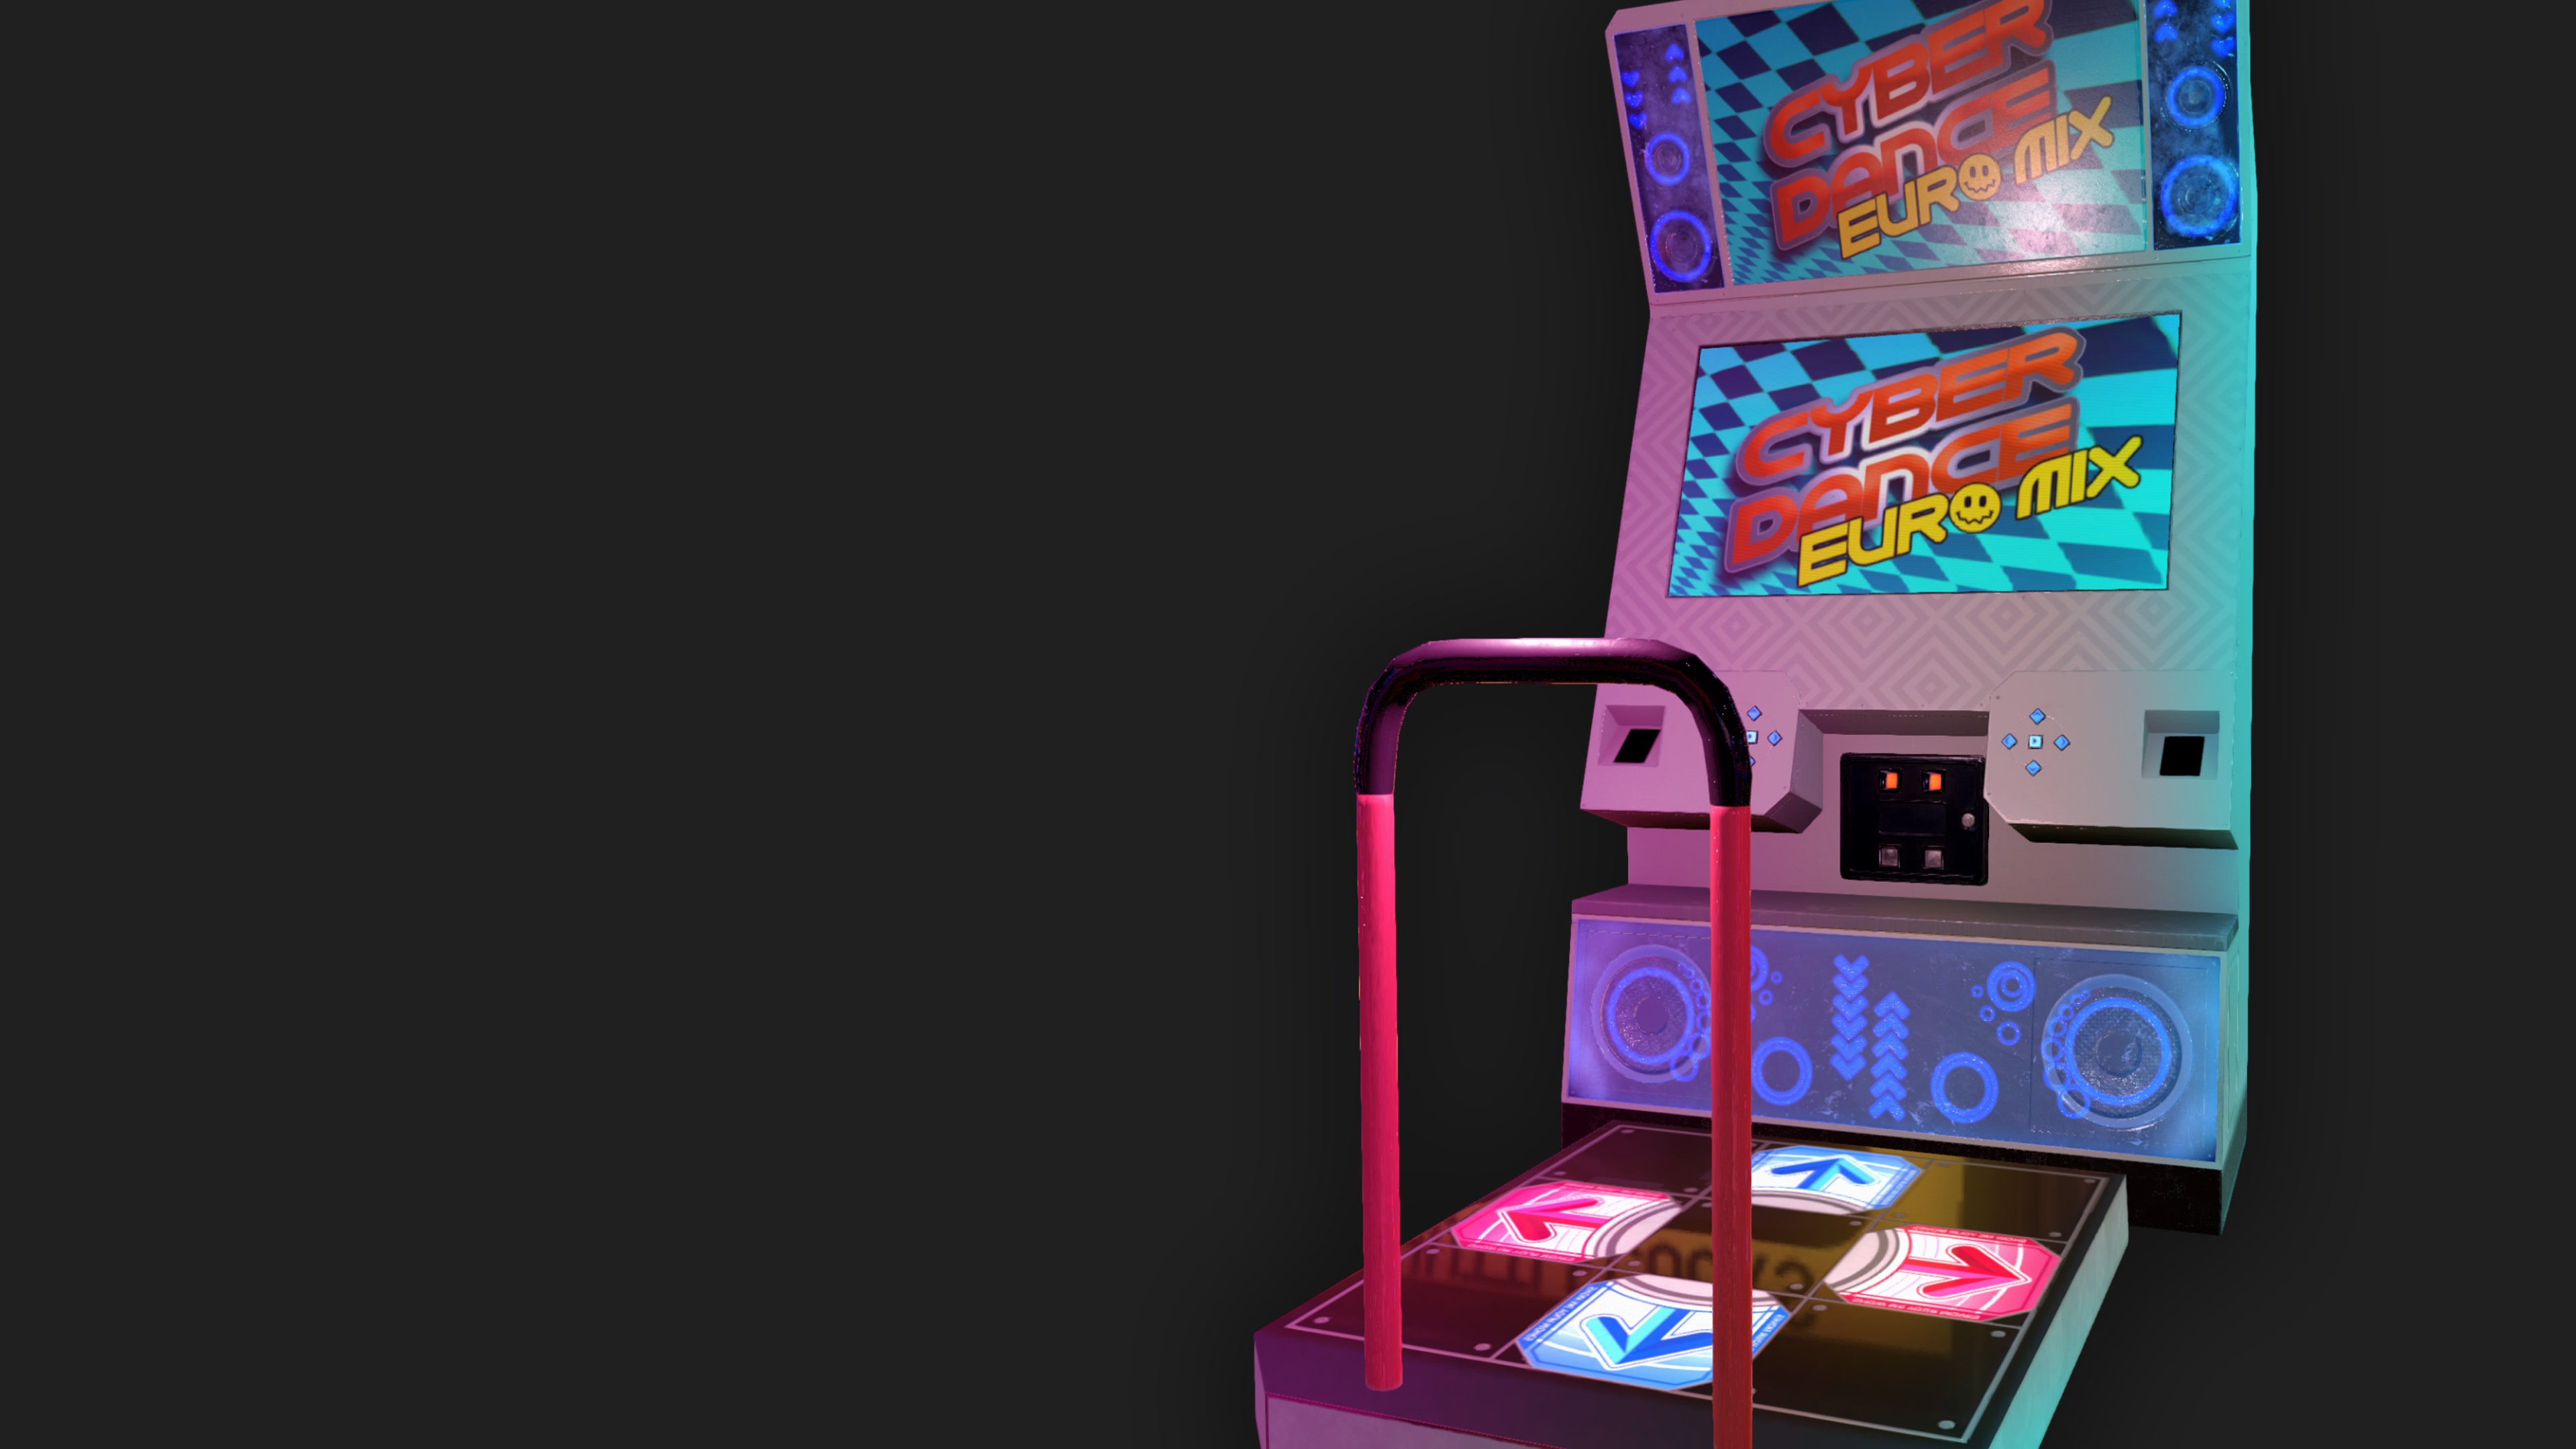 Arcade Paradise - Cyber Dance Euromix (English/Chinese/Korean/Japanese Ver.)